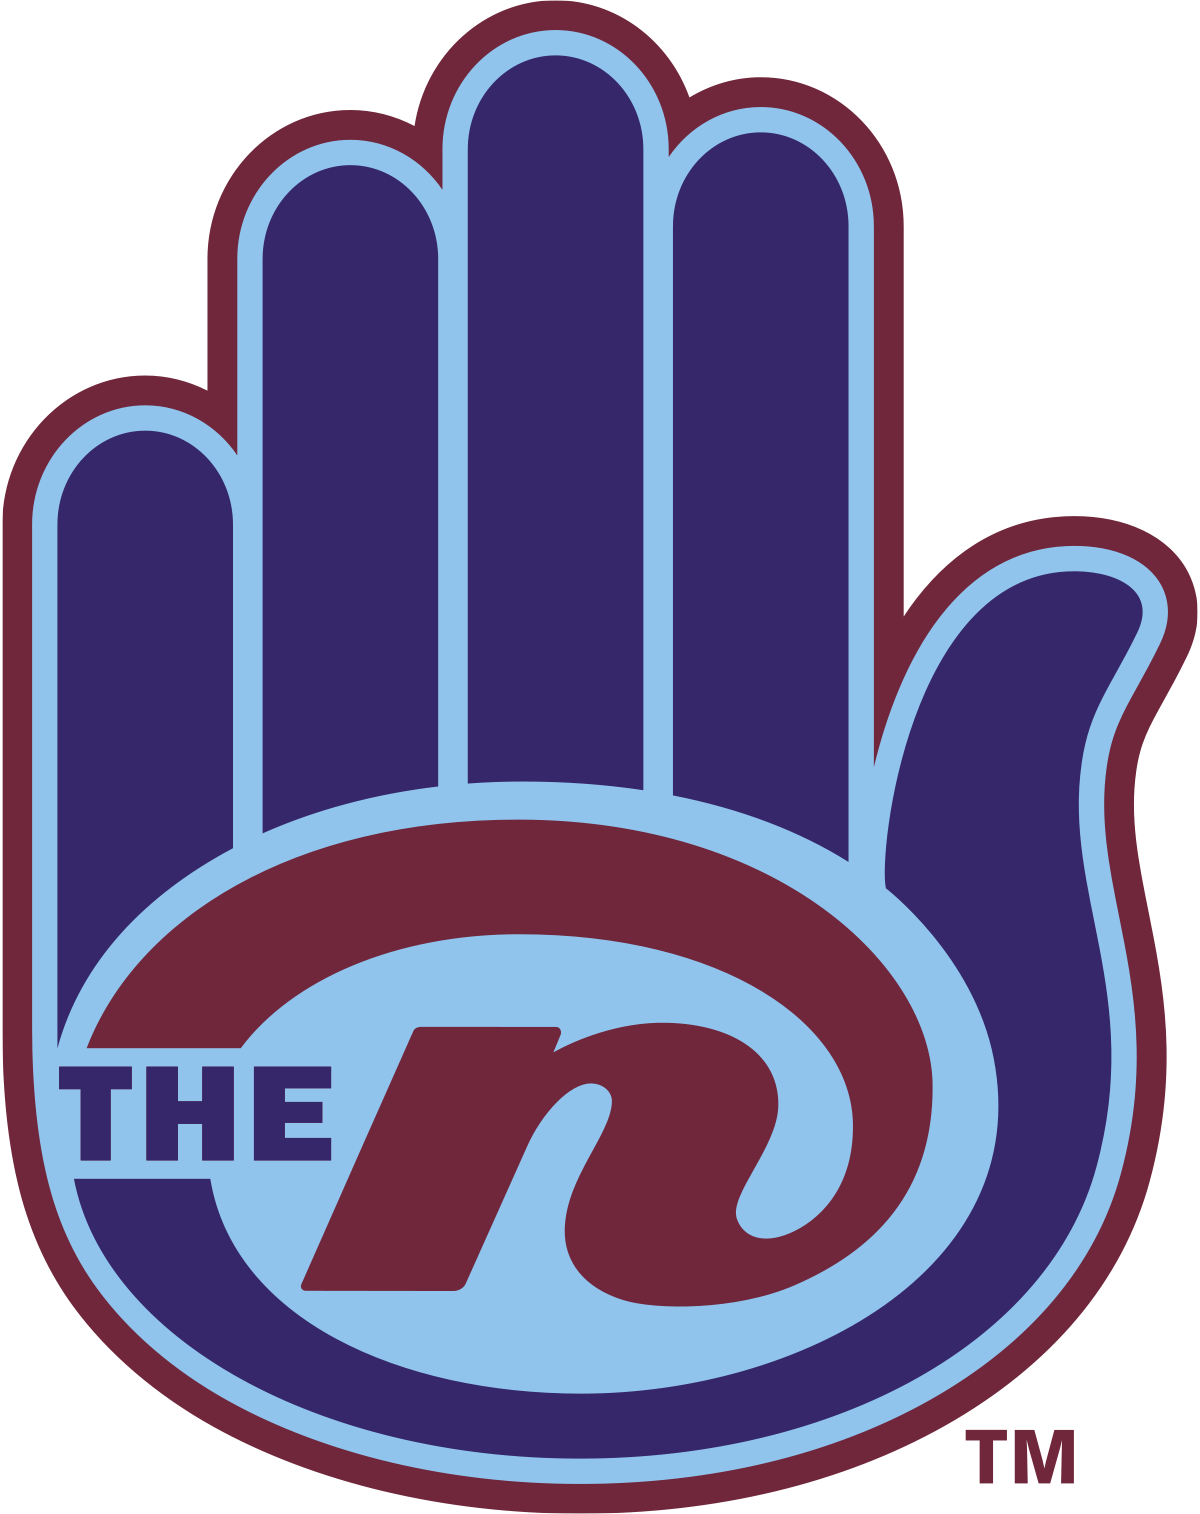 TeenNick Channel Logo - The n Logos